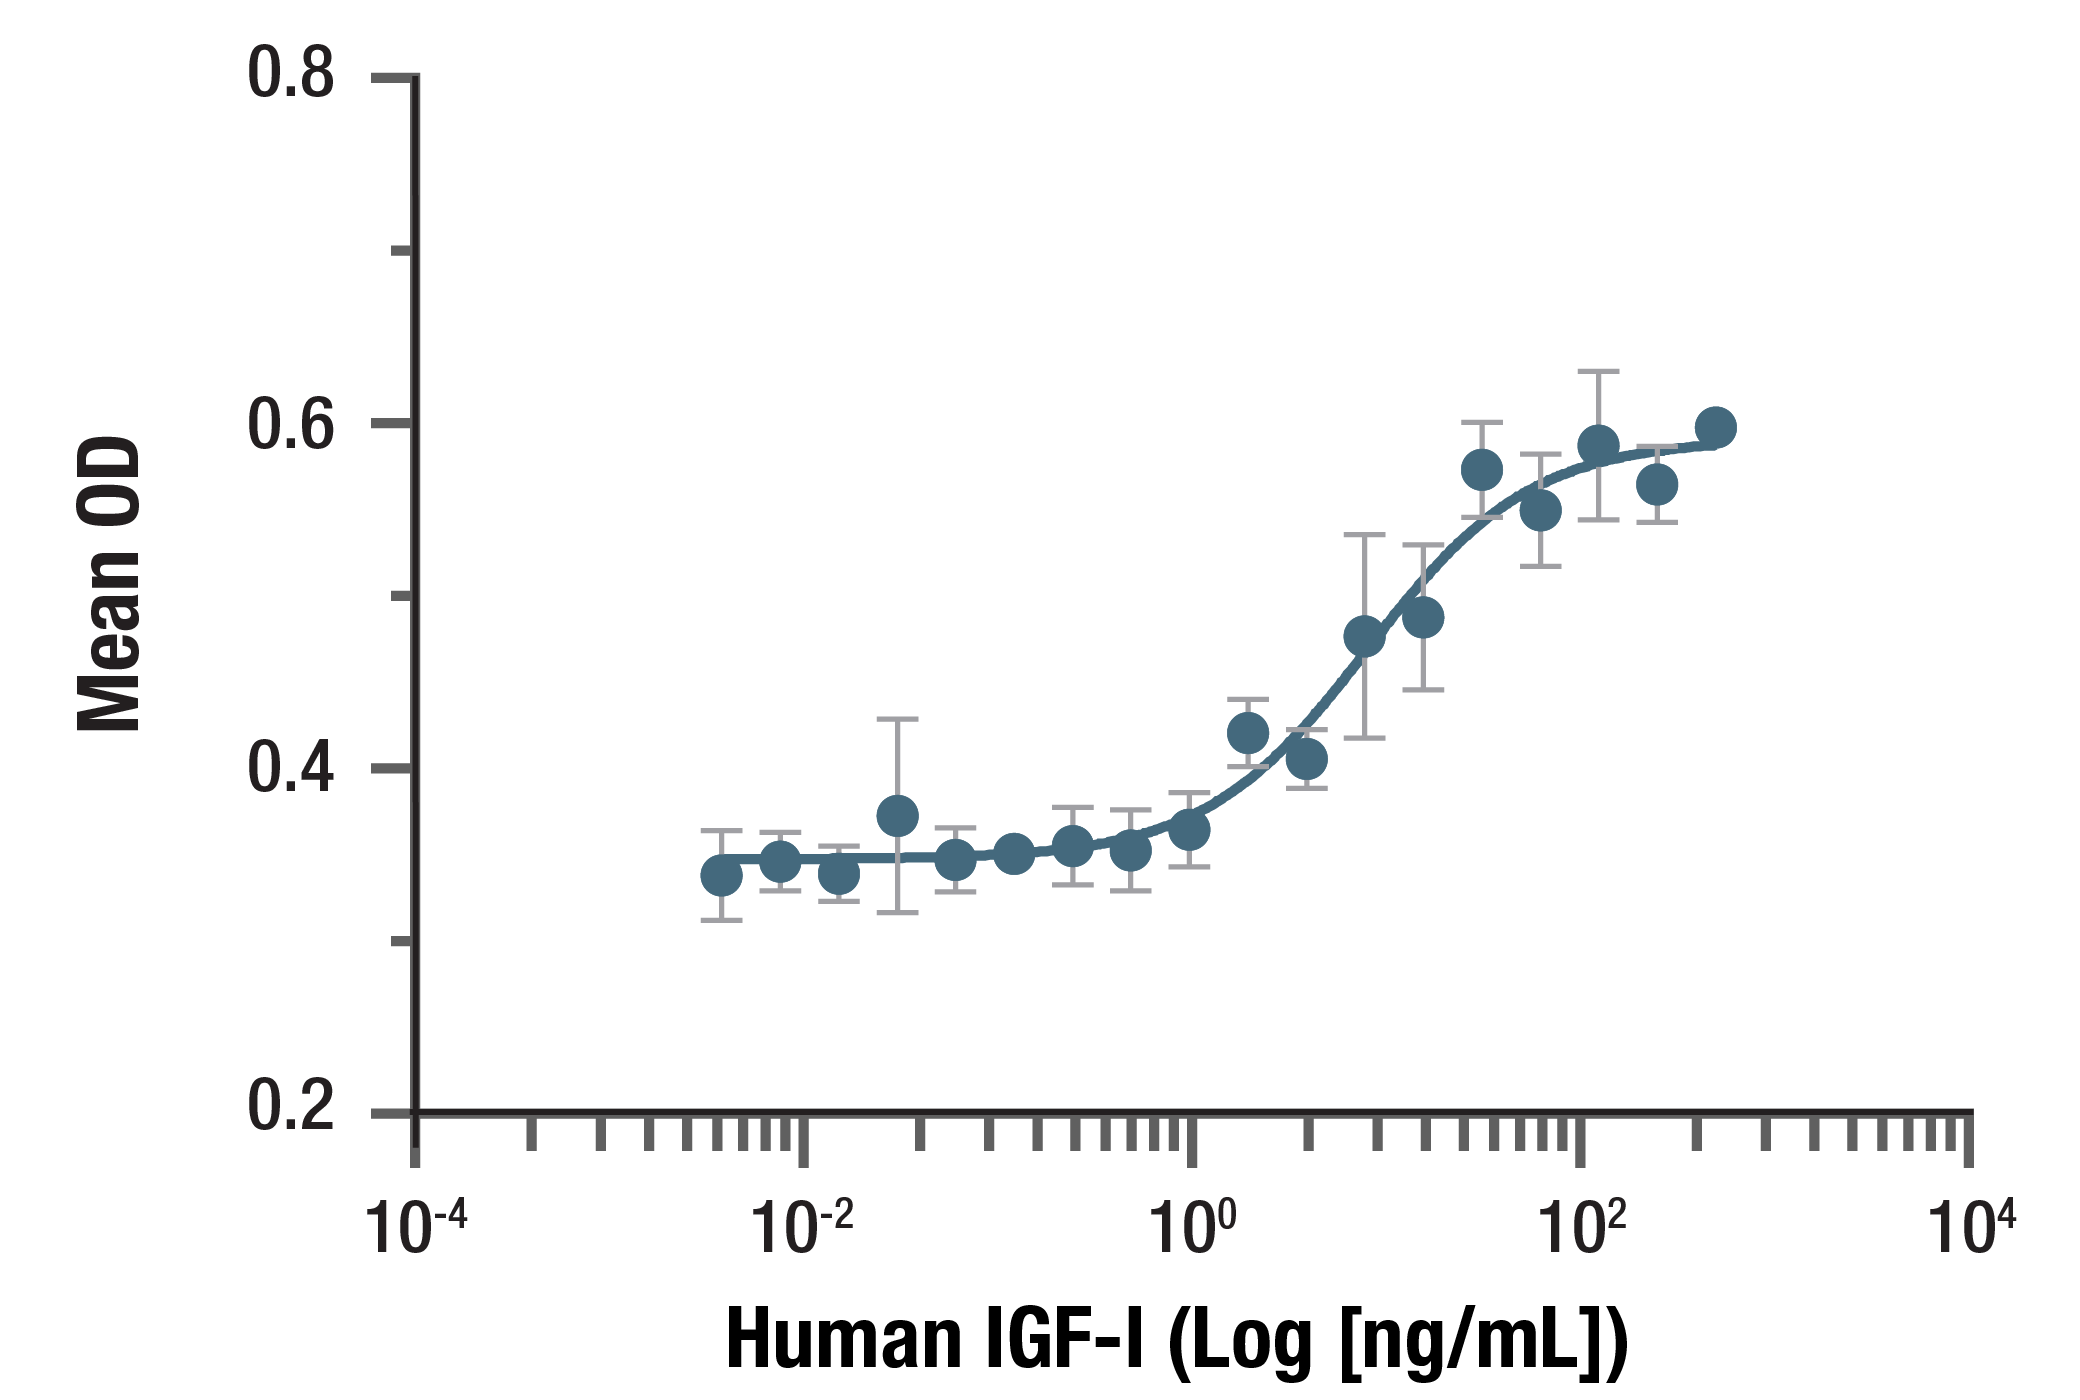  Image 1: Human IGF-I Recombinant Protein